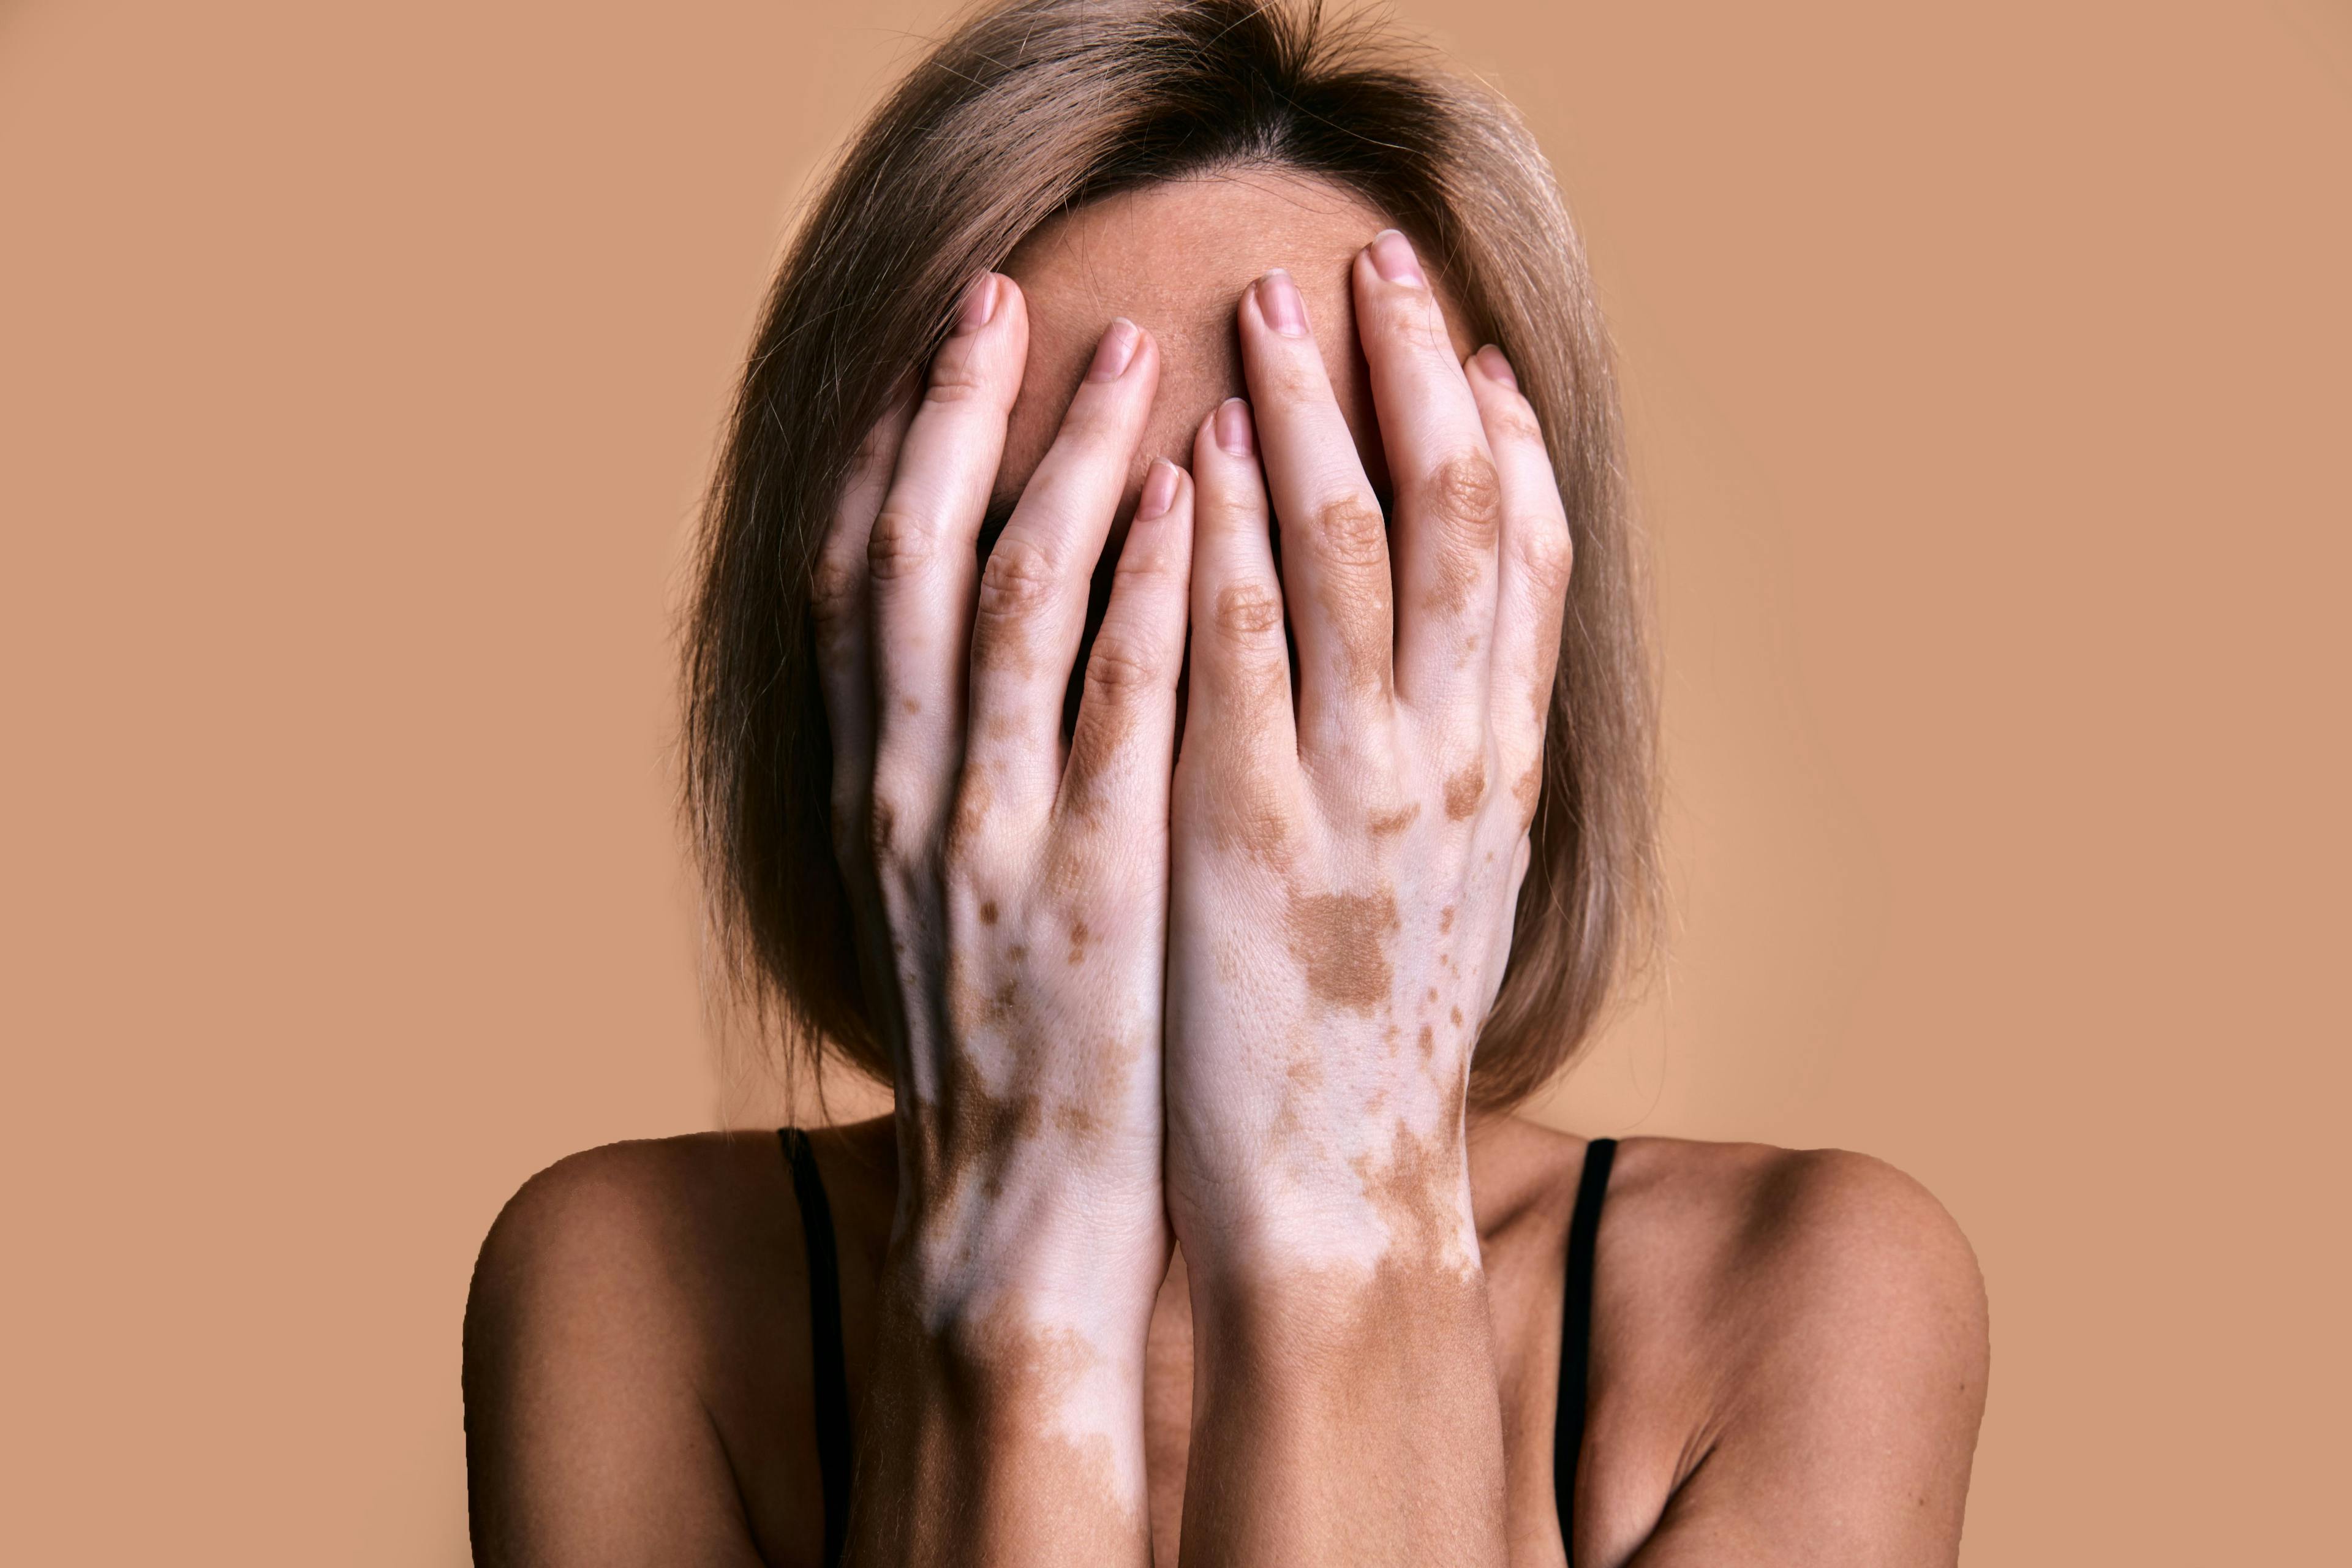 Woman with vitiligo